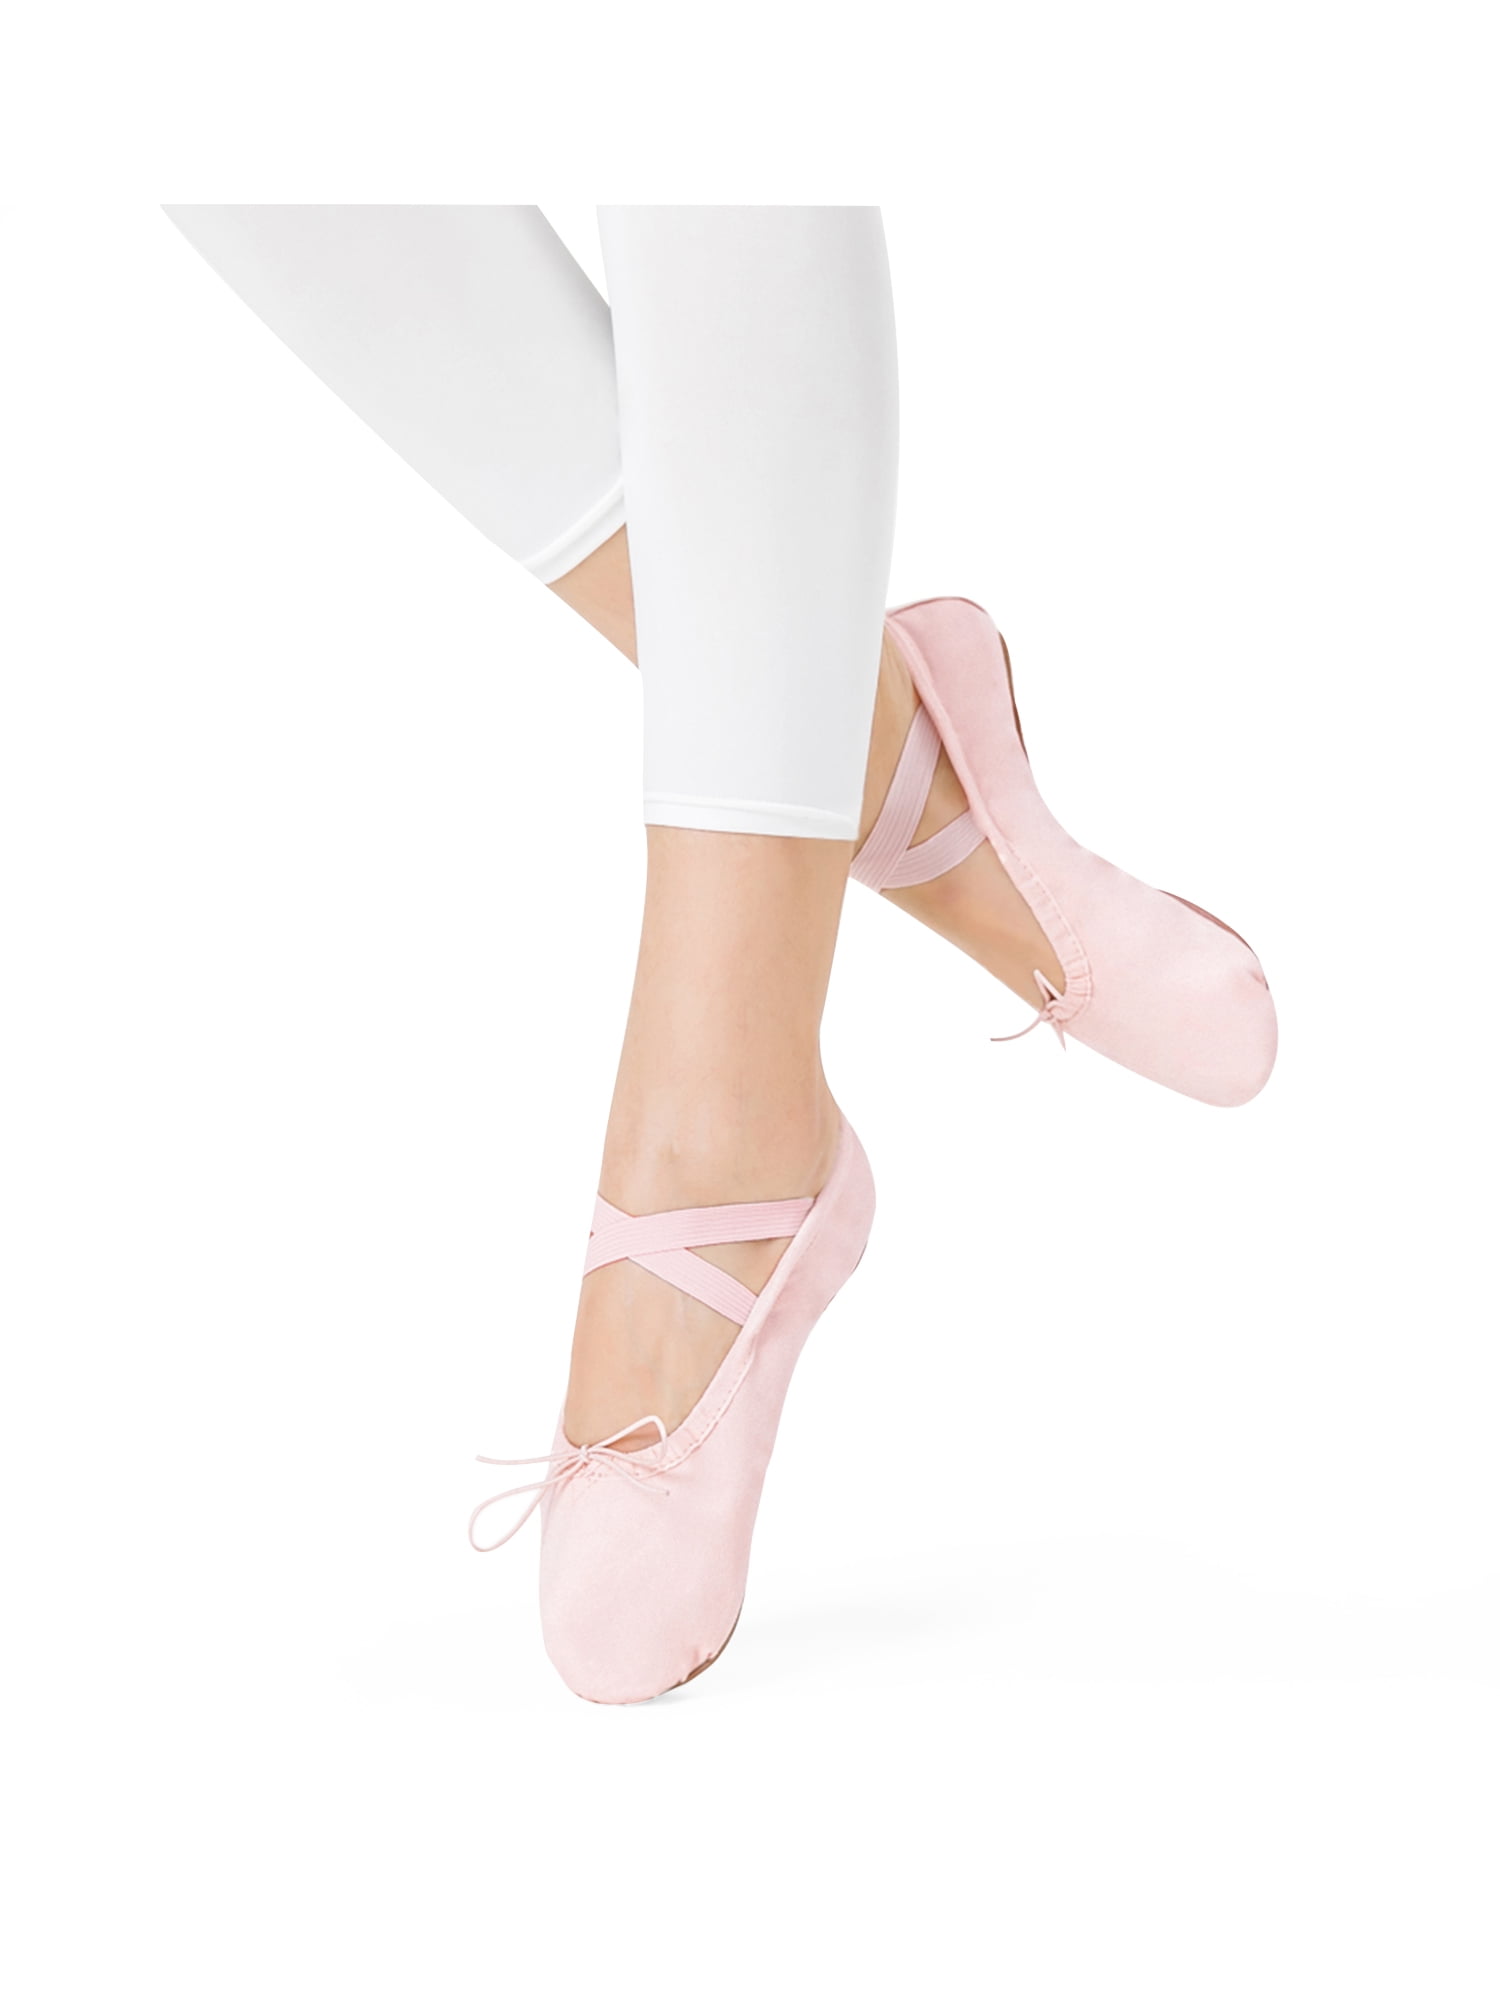 s.lemon Ballet Shoe Girls Elastic Ballet Slippers Stretch Canvas Dance Shoes for Kids Adult